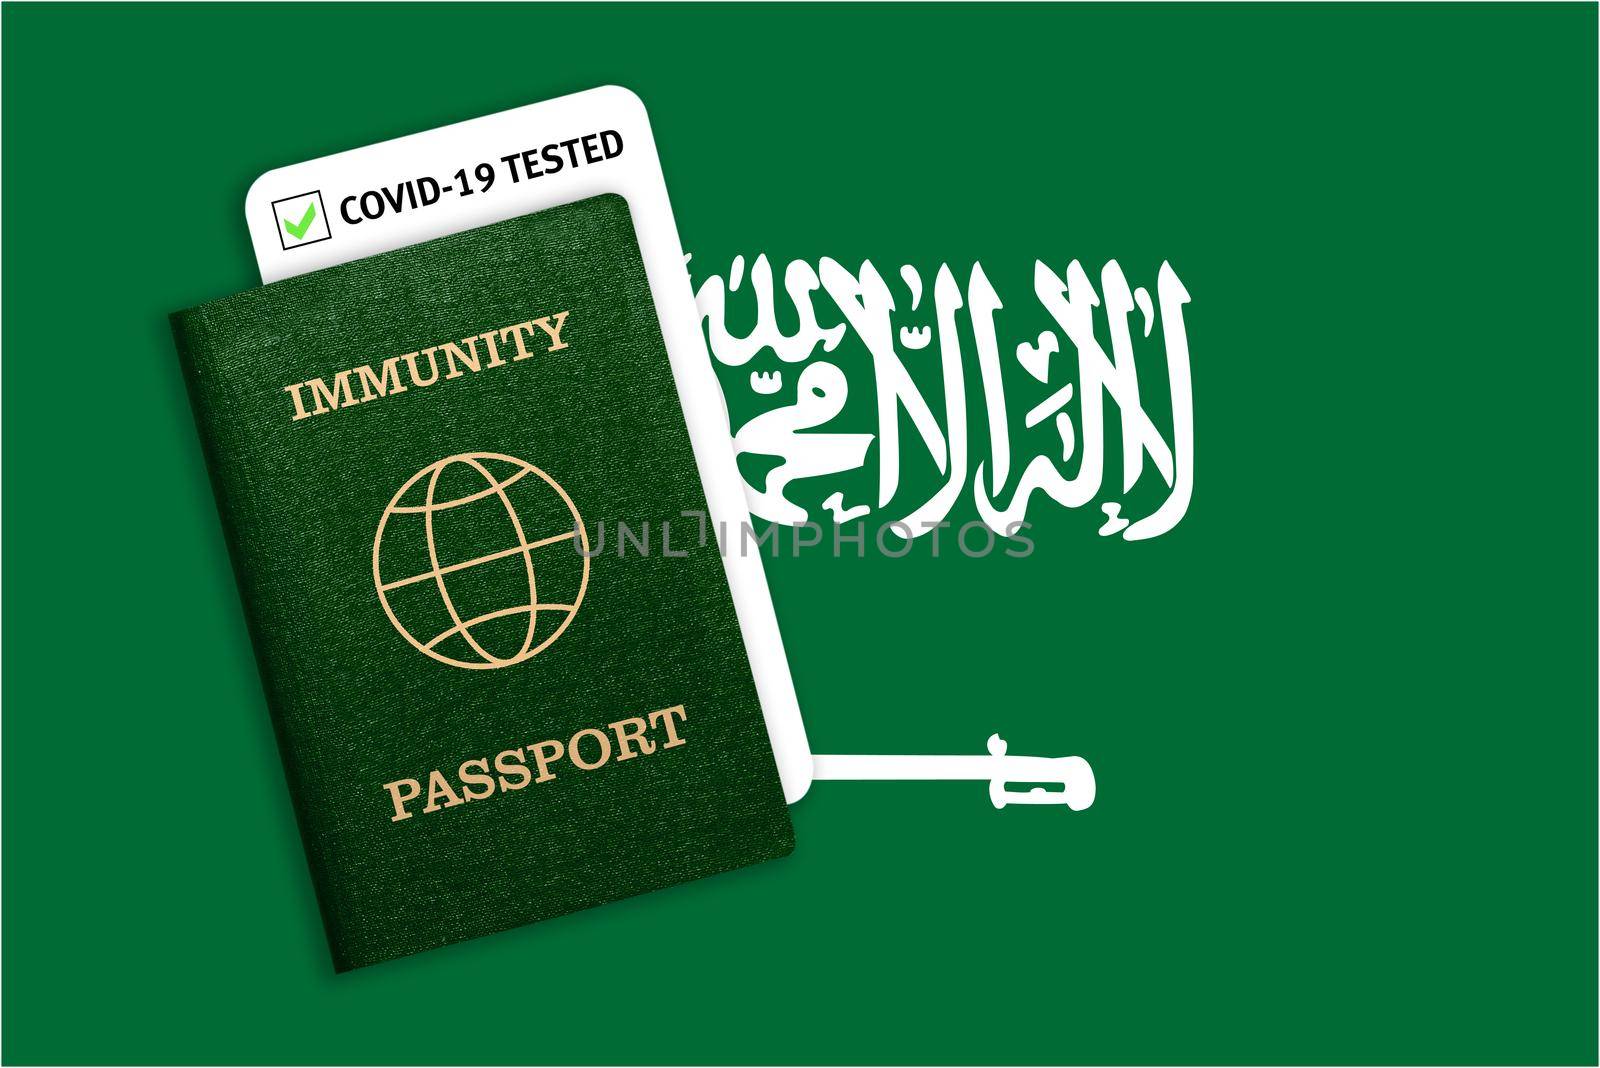 Immunity passport and test result for COVID-19 on flag of Saudi Arabia by galinasharapova